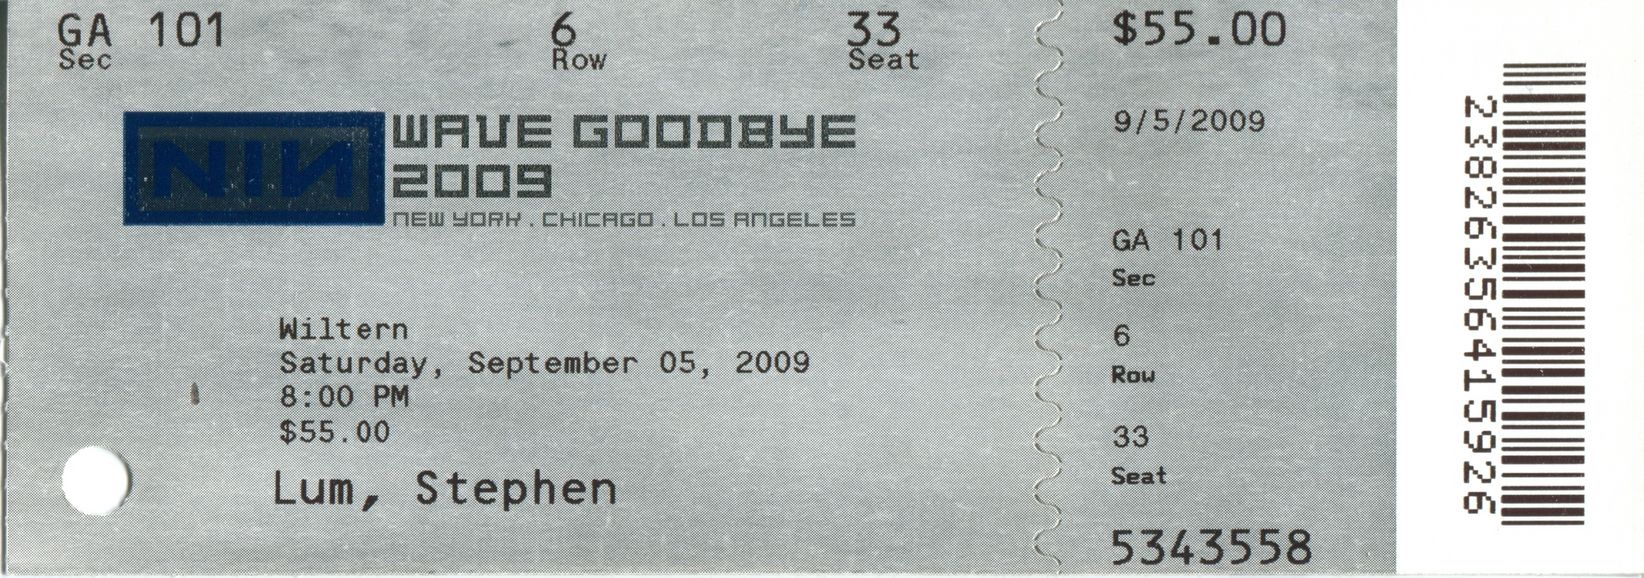 2009/09/10 Ticket